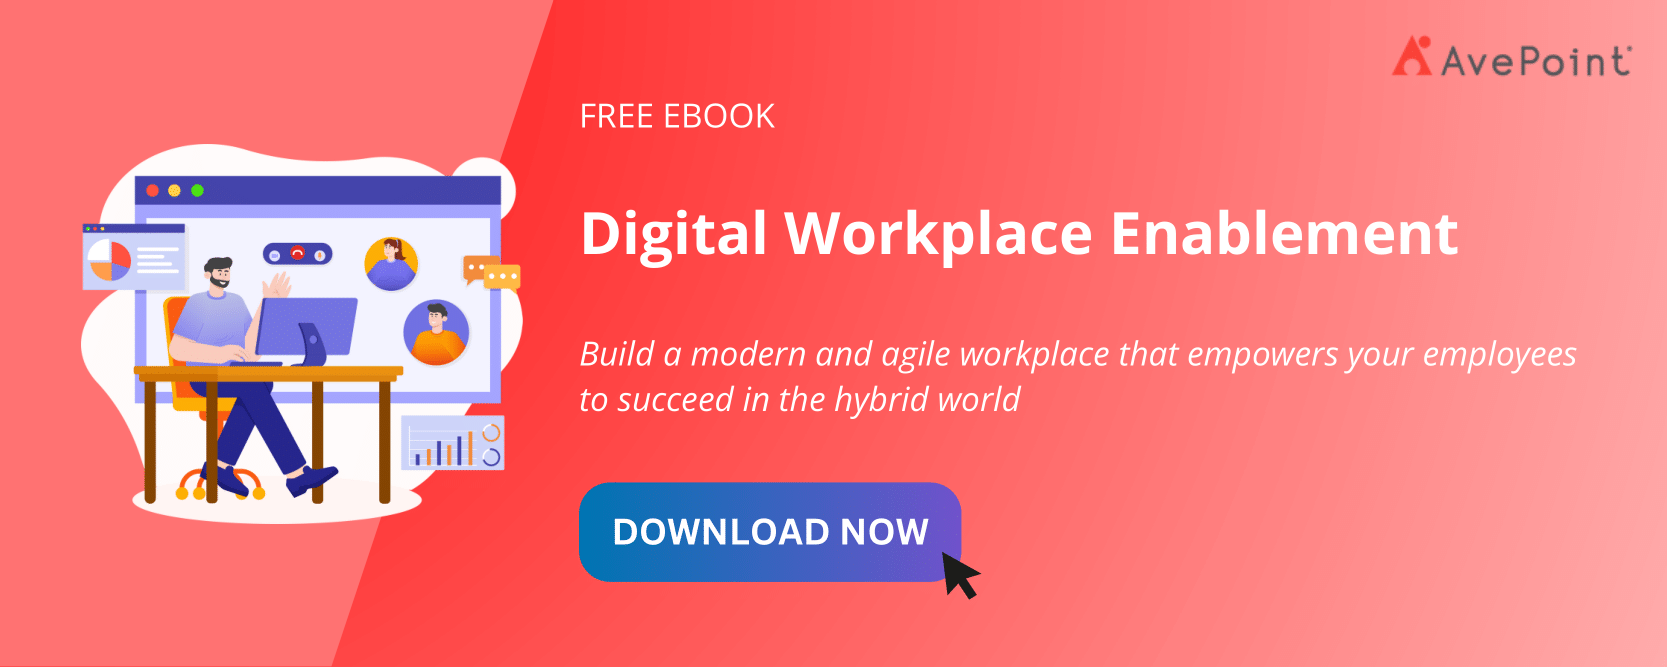 digital workplace enablement ebook